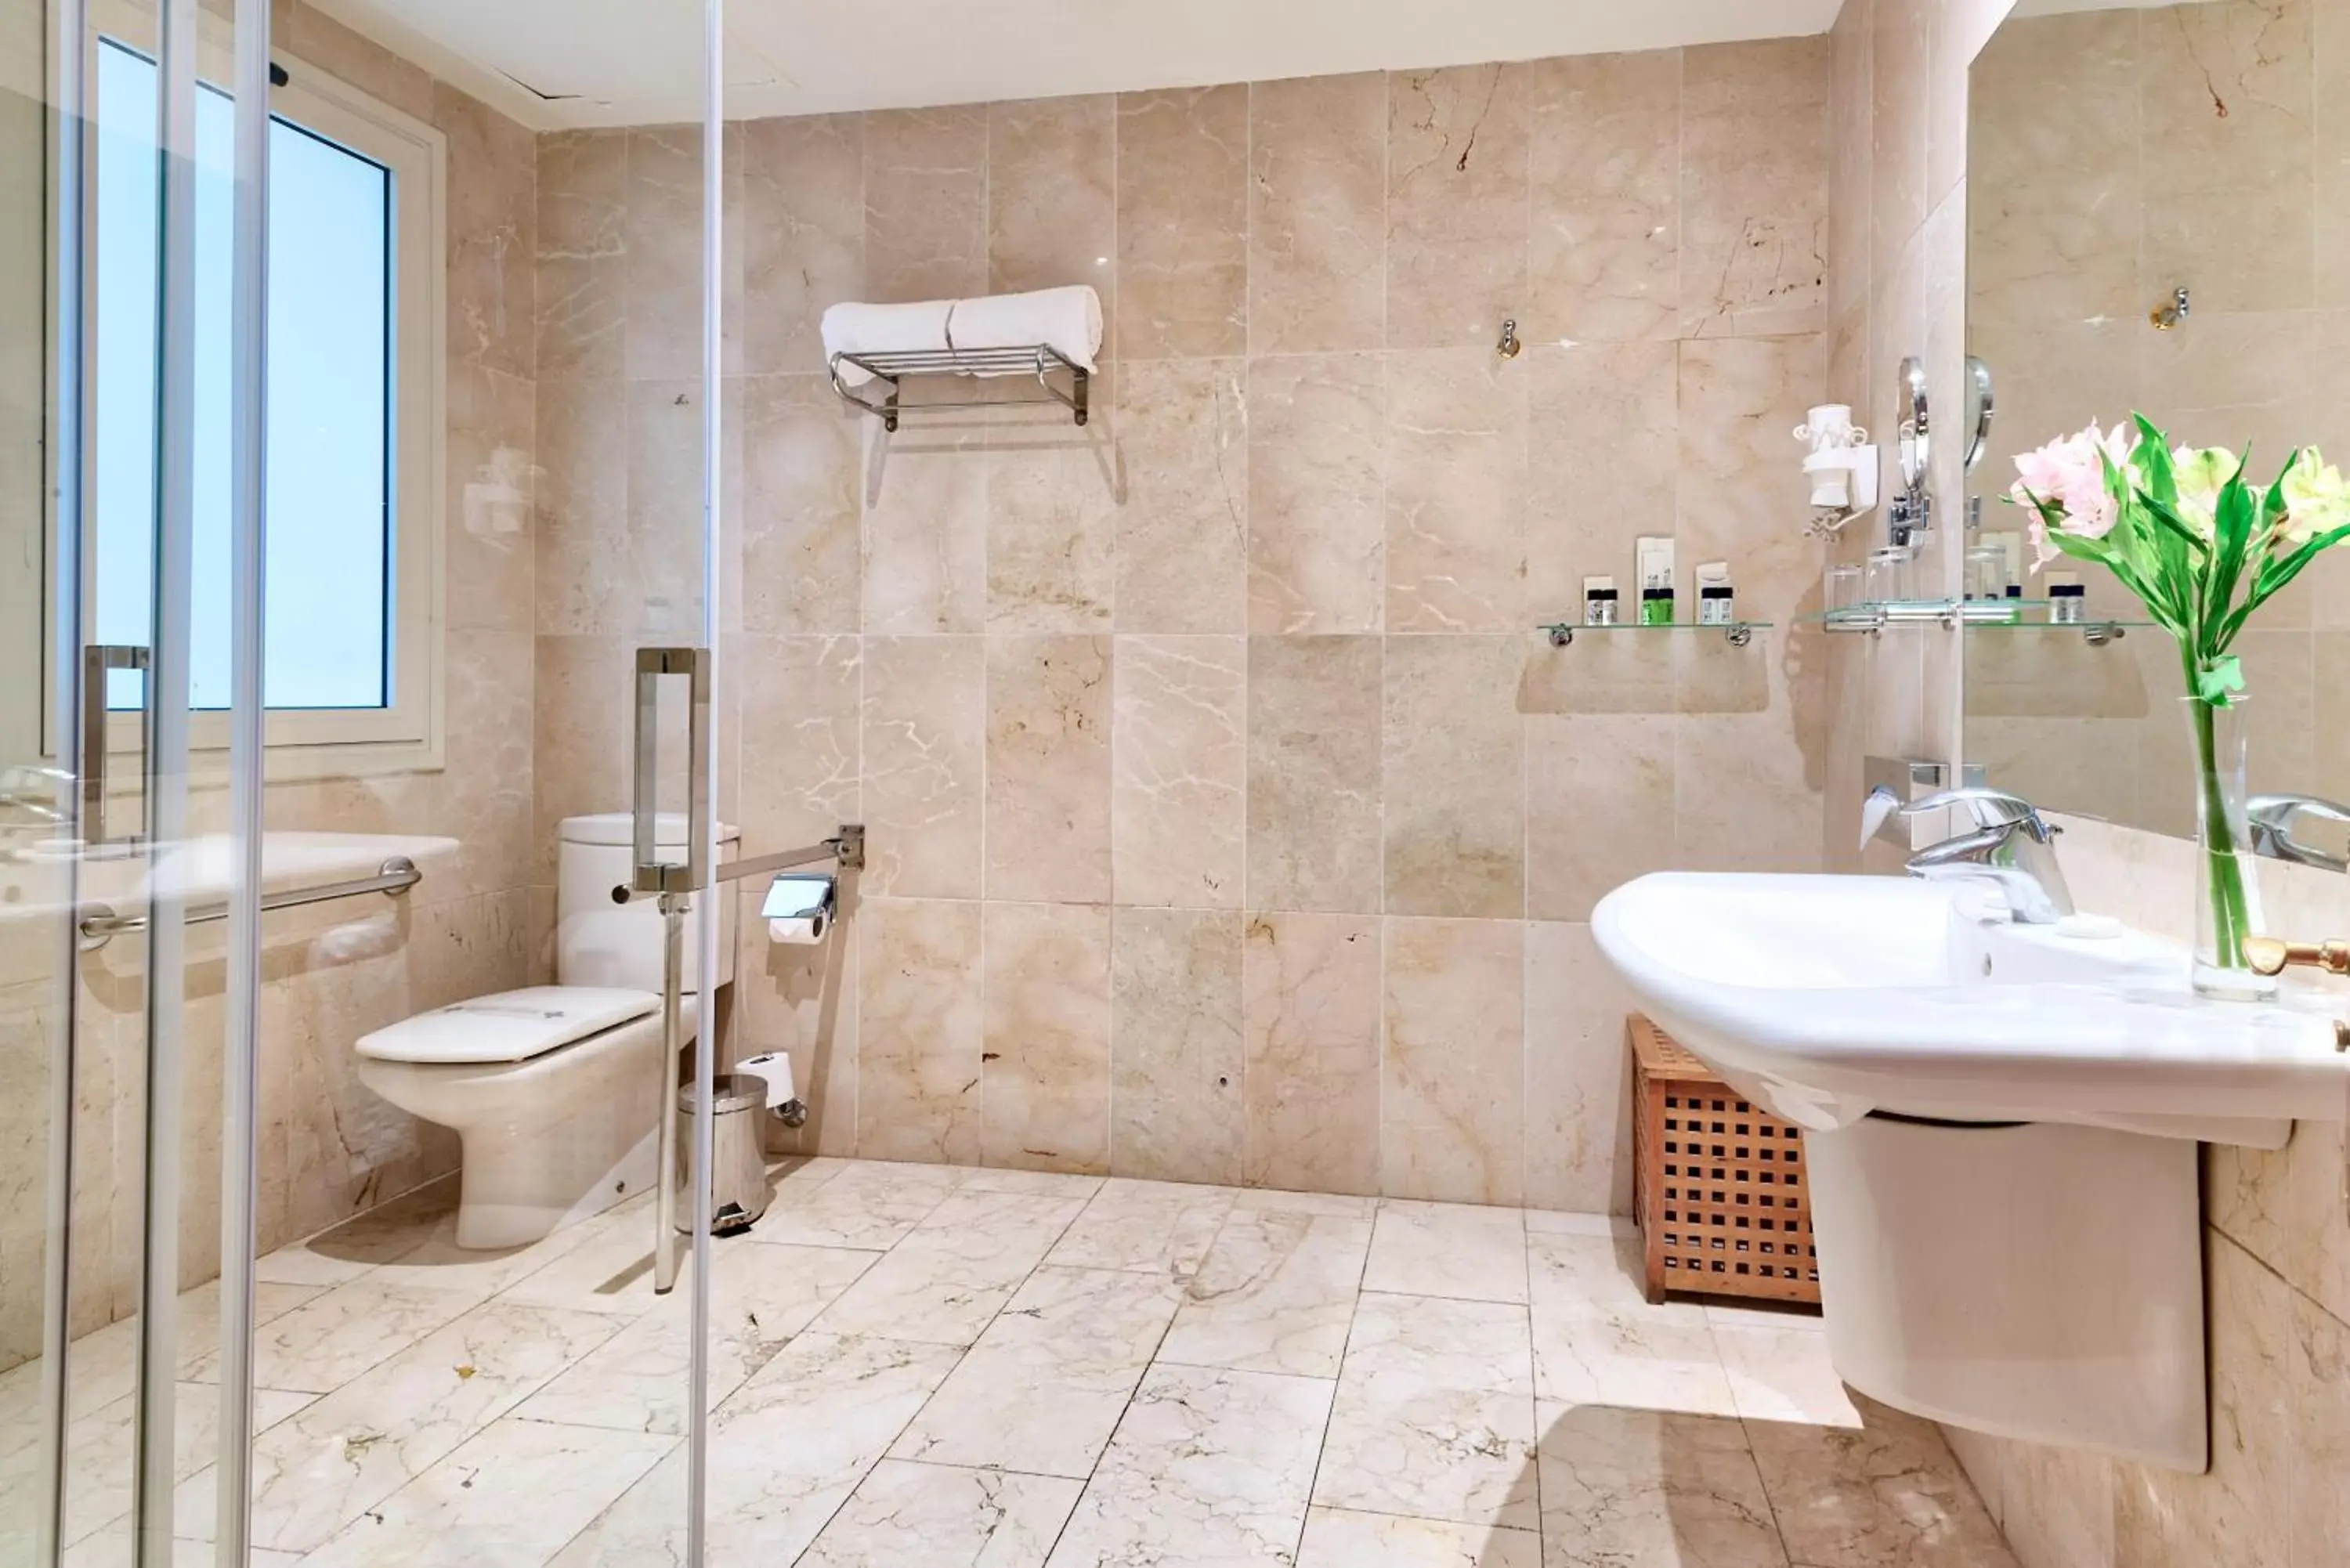 Facility for disabled guests, Bathroom in Hotel Roger de Llúria